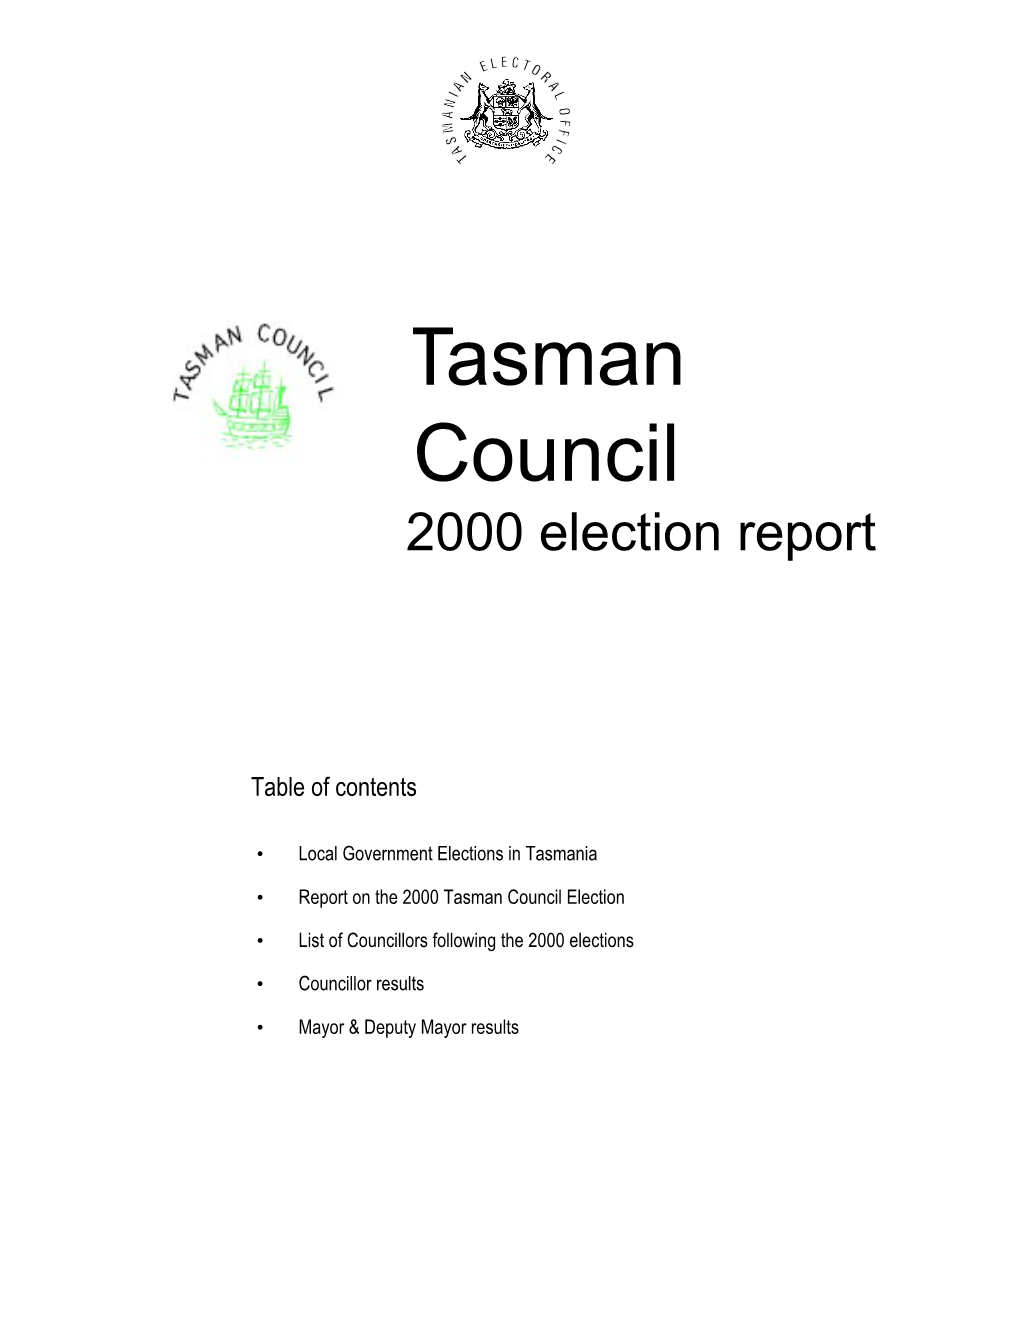 Tasman Council 2000 Election Report